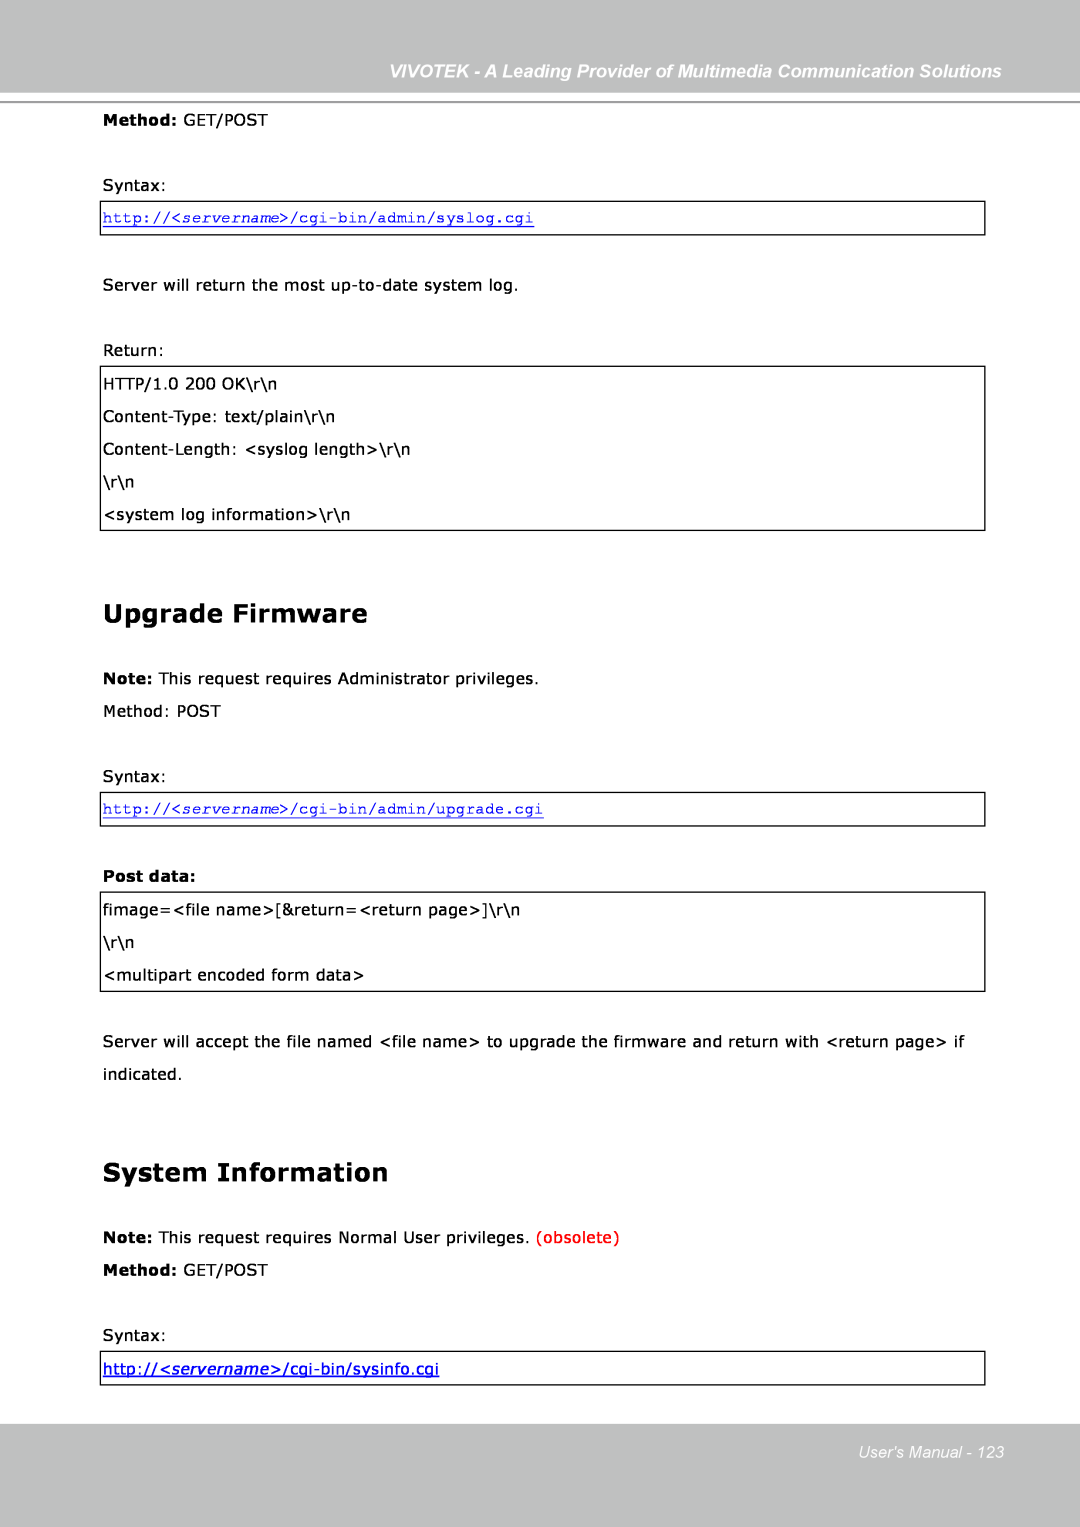 Vivotek FD7141(V) manual Upgrade Firmware, System Information, Method: GET/POST, Post data 